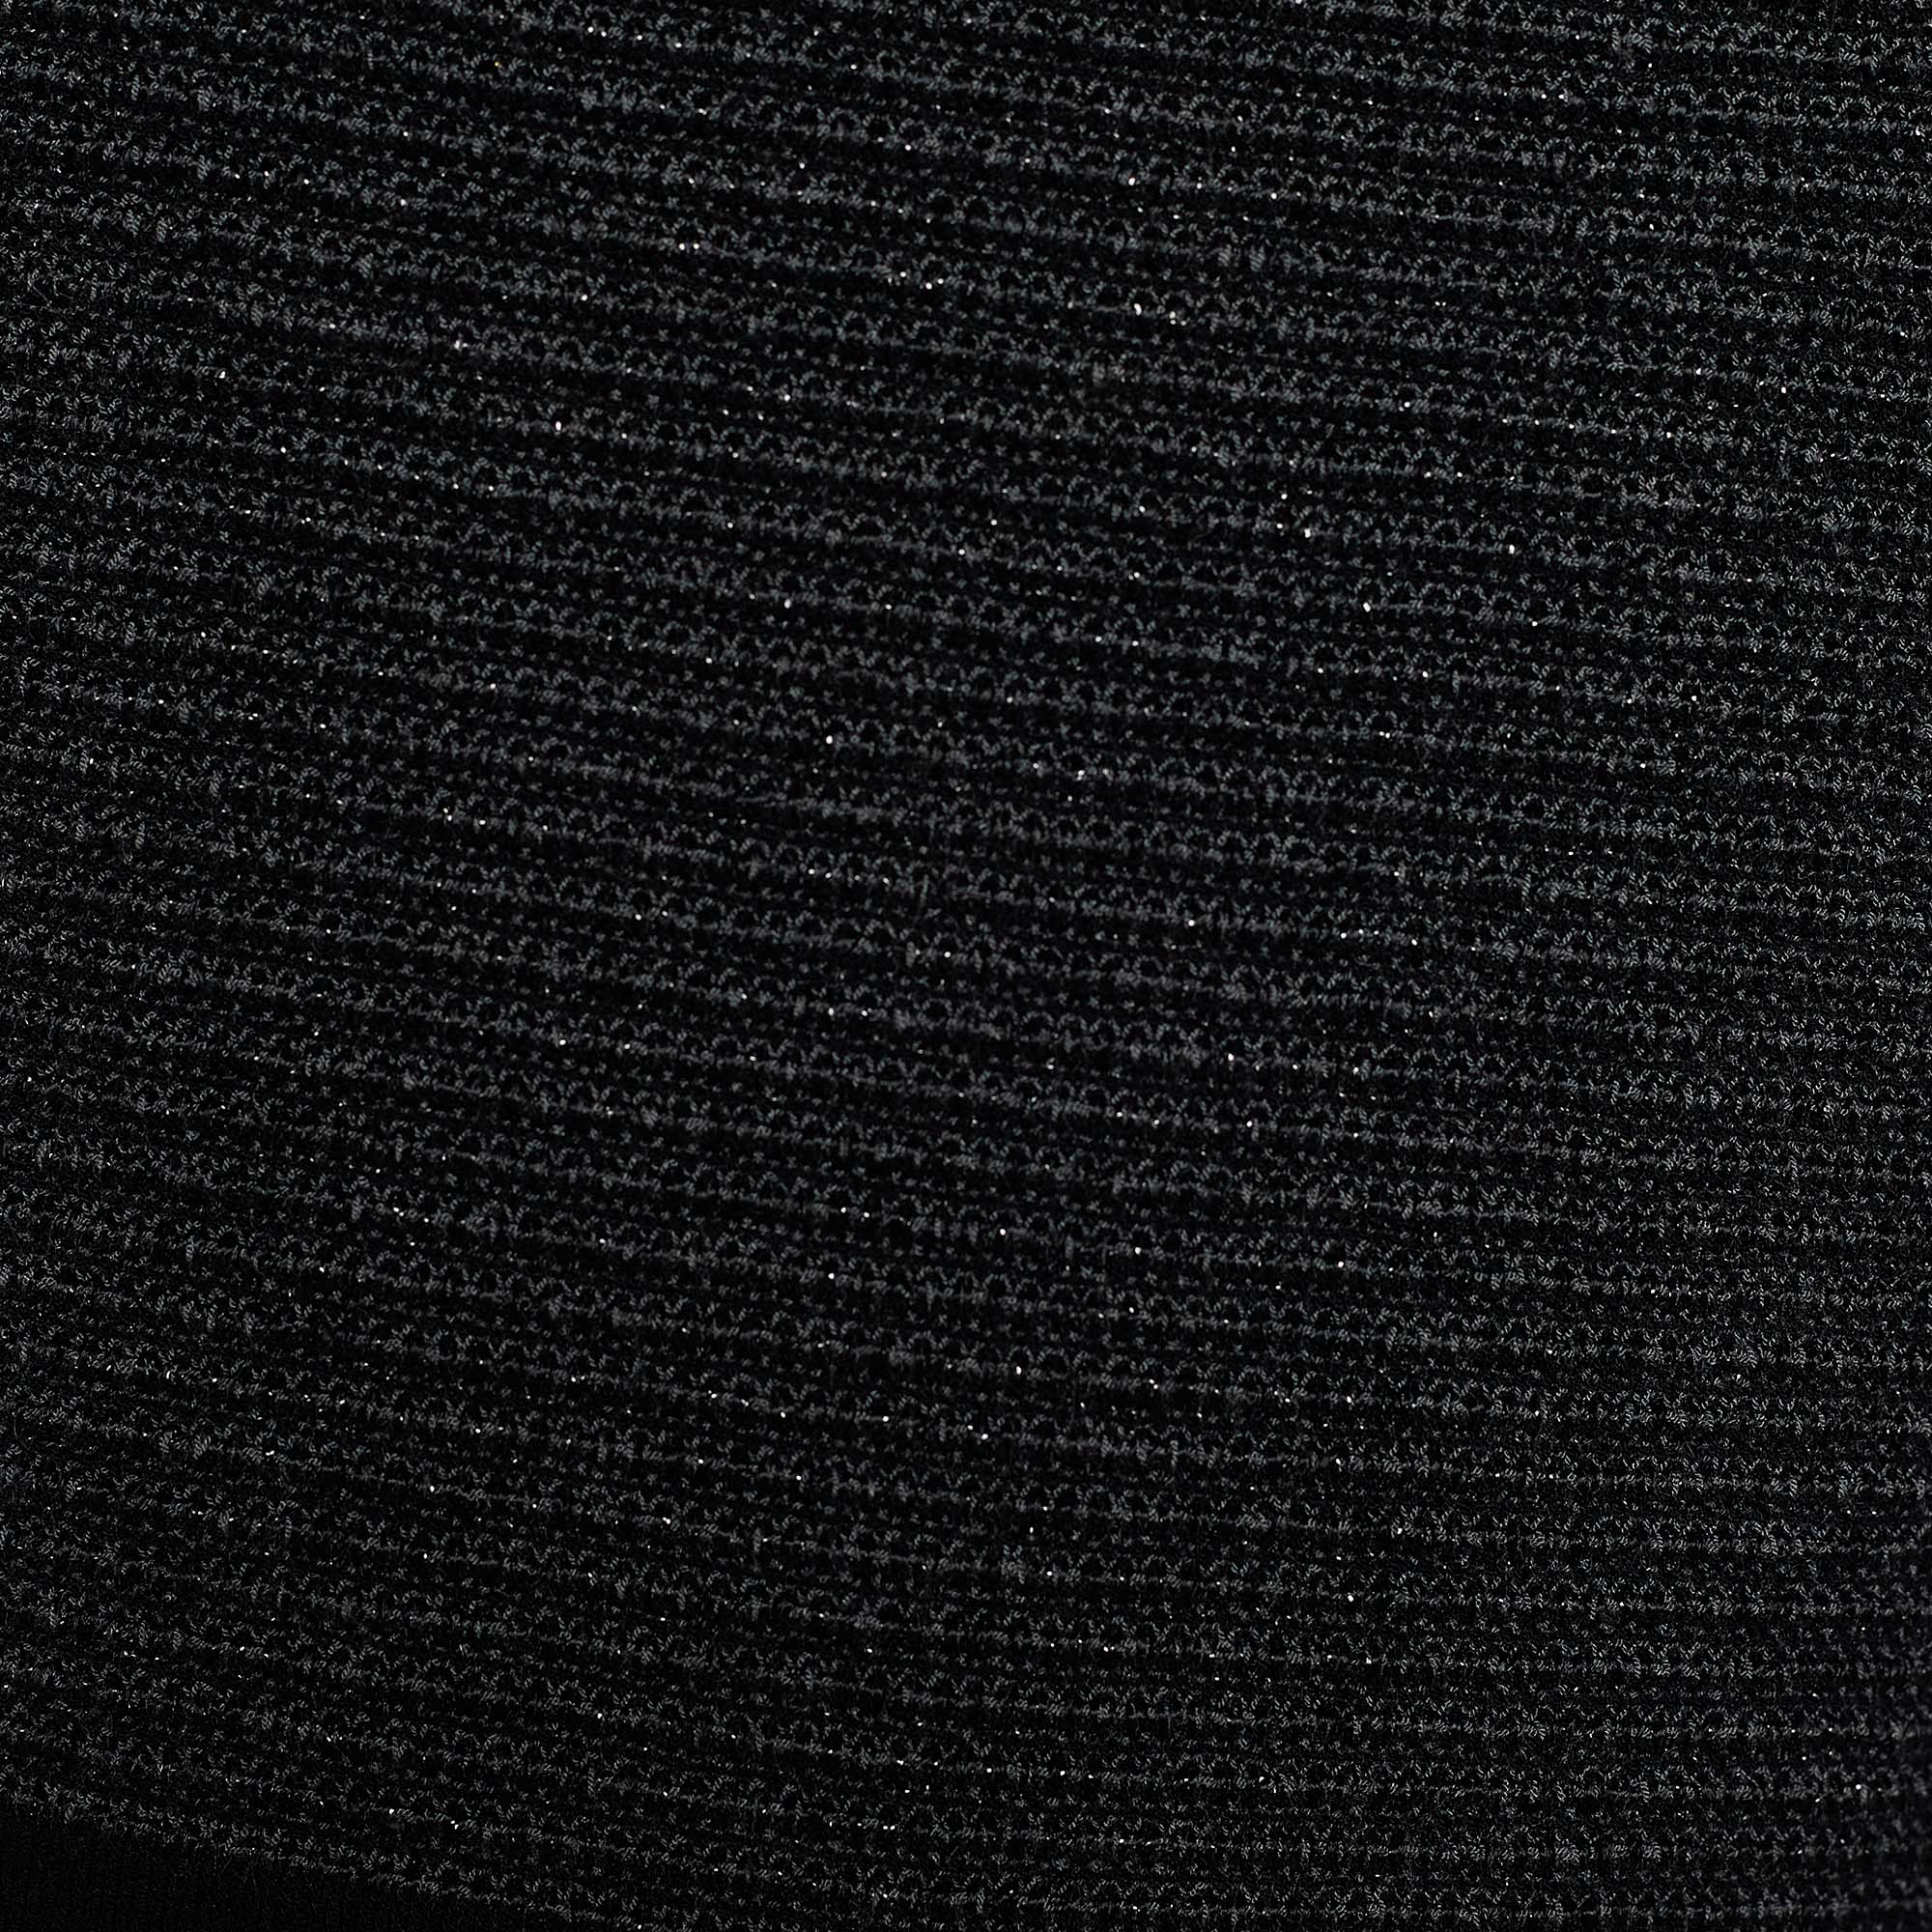 Emporio Armani Black Knit Sleeveless Top S